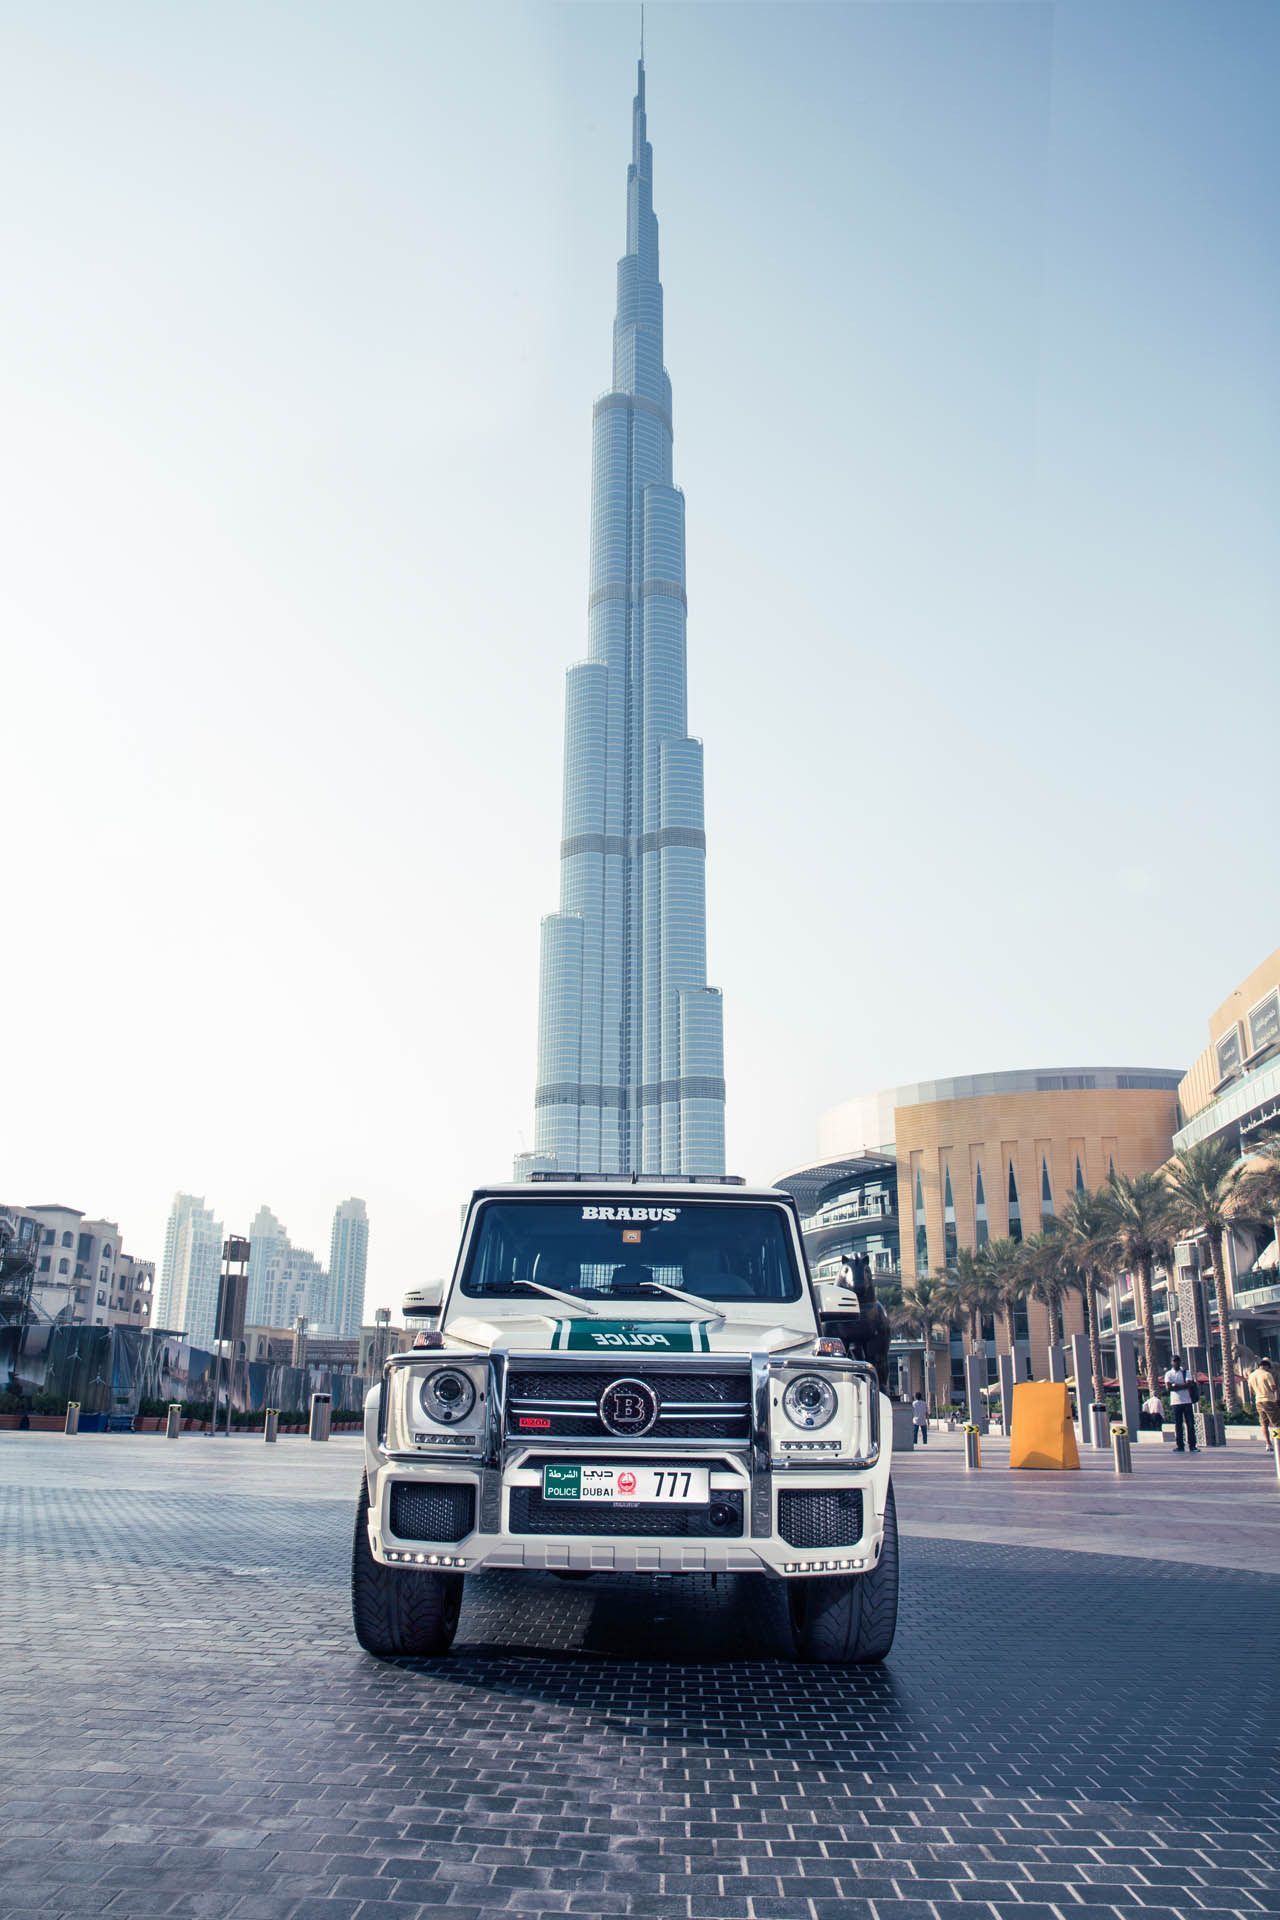 Burj Khalifa Dubai HD Wallpapers & Pictures | HD Wallapers for Free